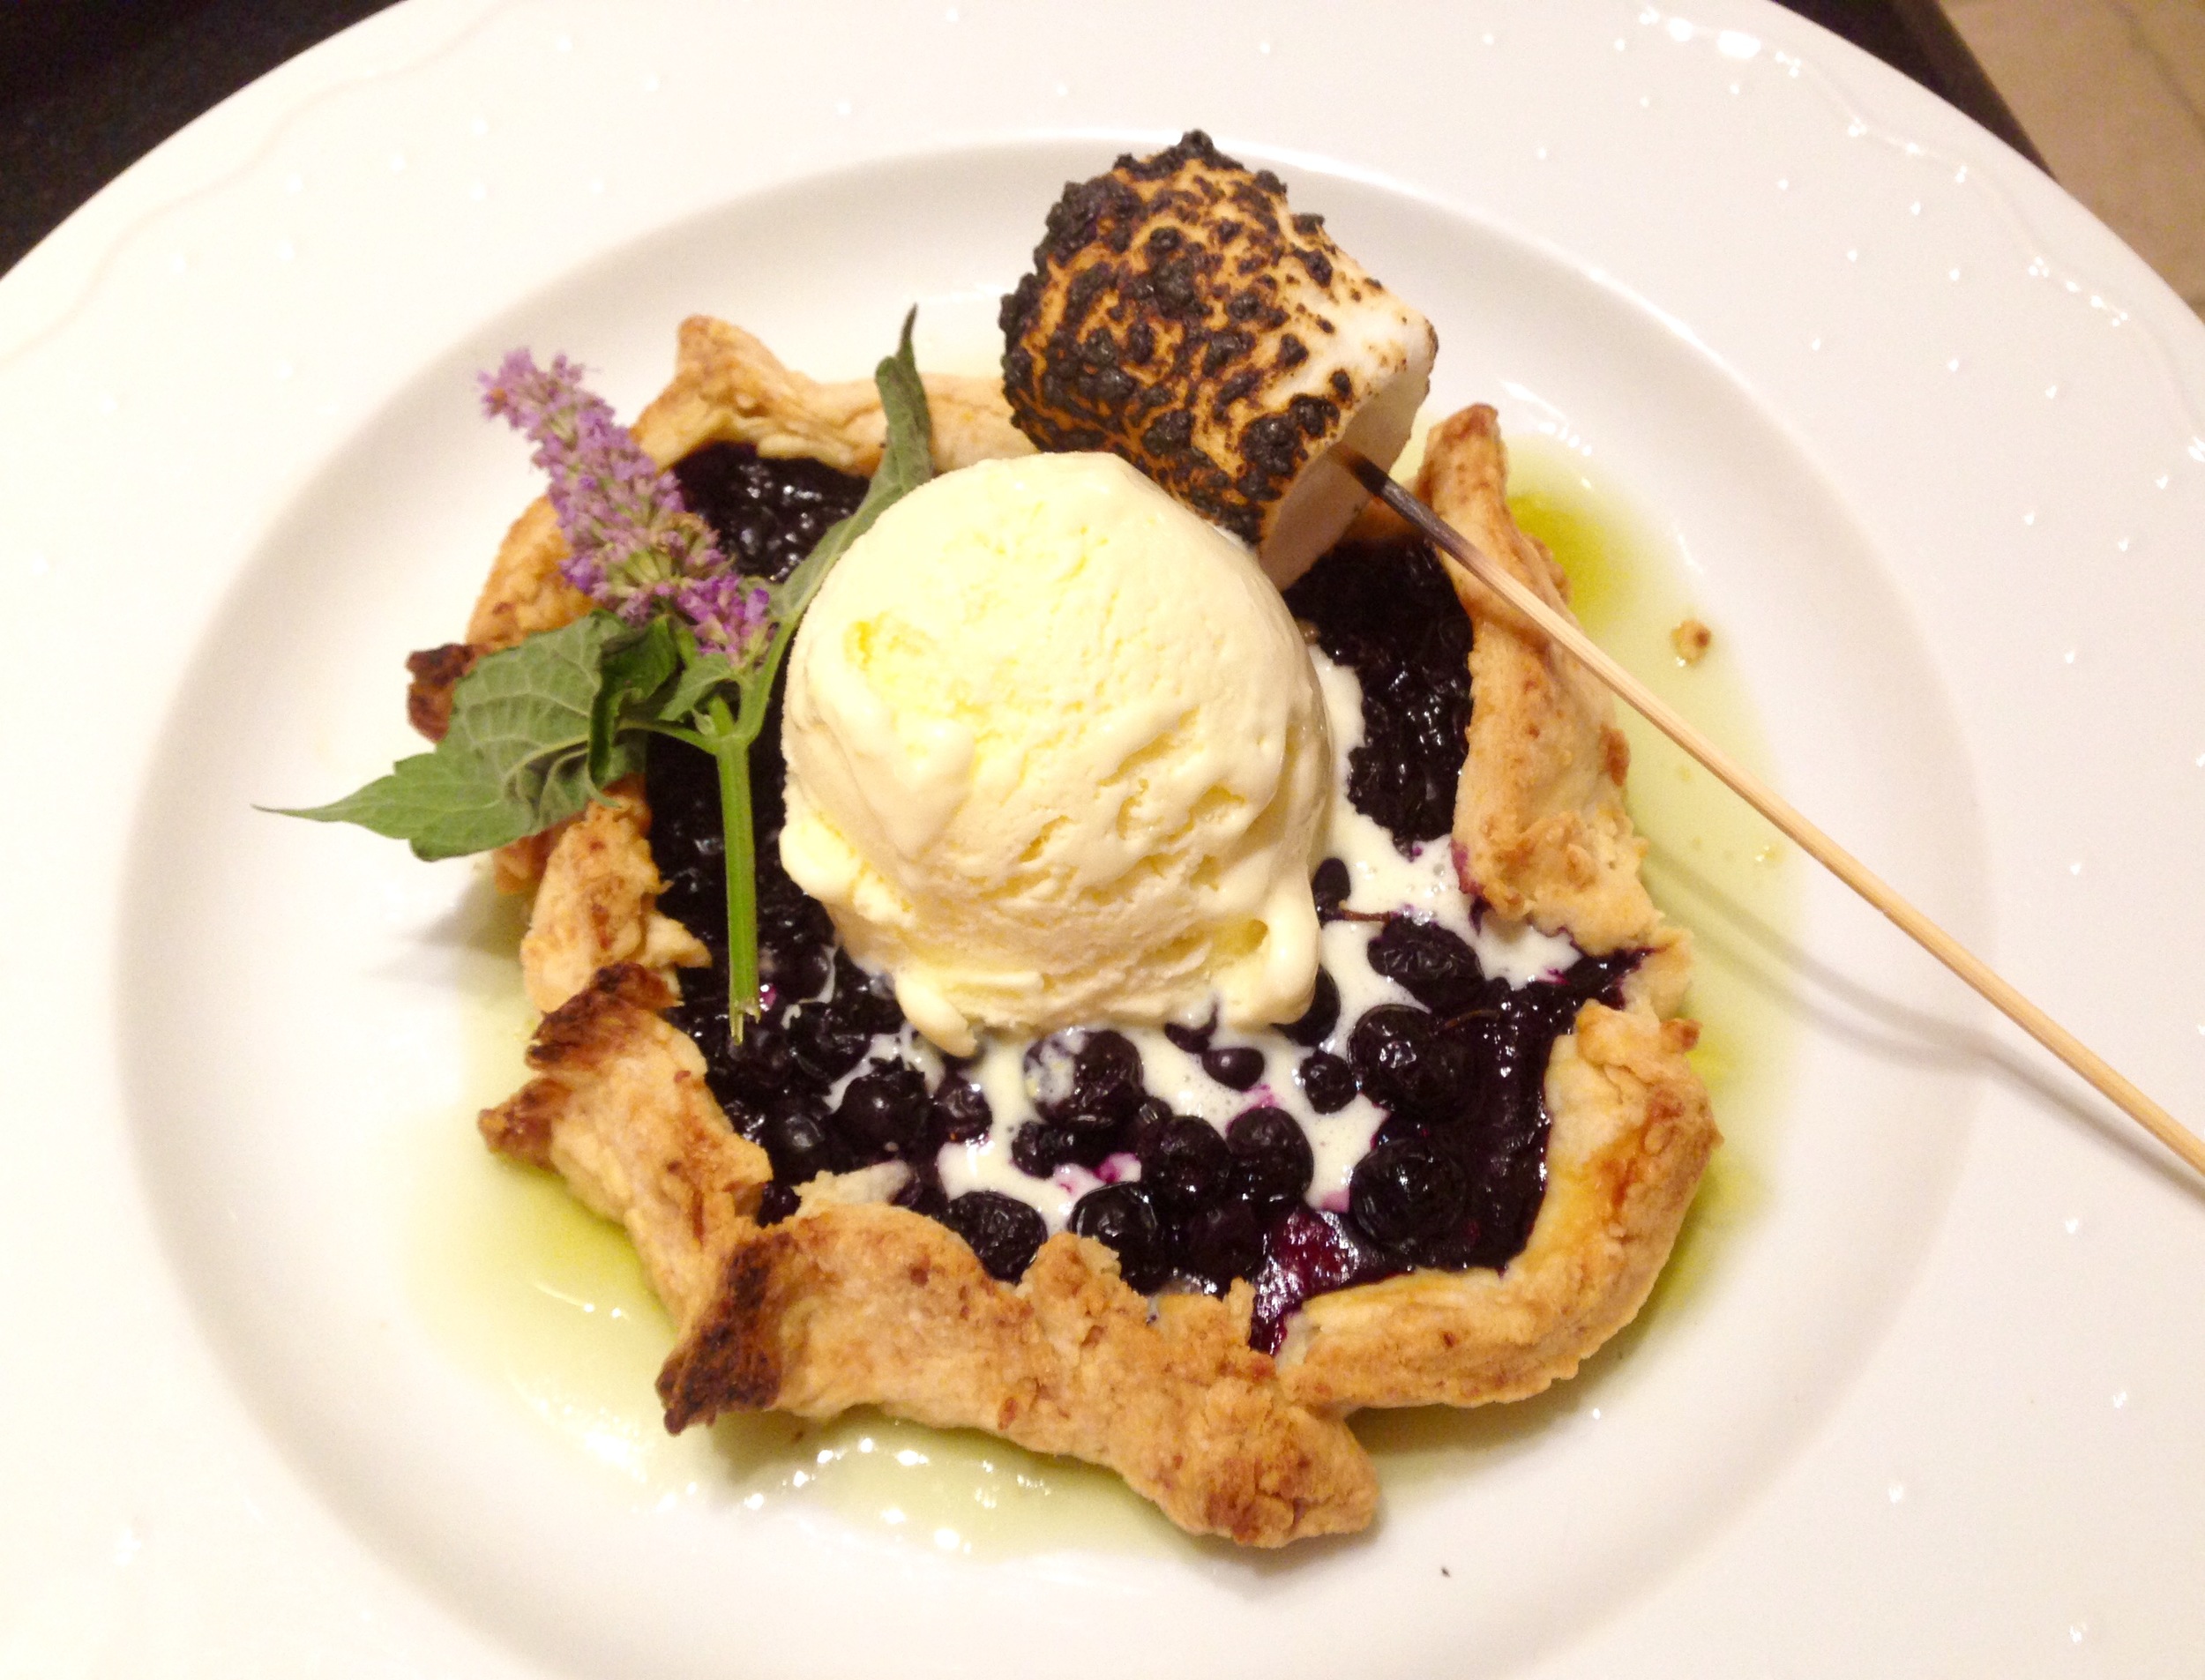 Blueberry tart with sweet corn ice cream, basil gelee, burnt marshmallow